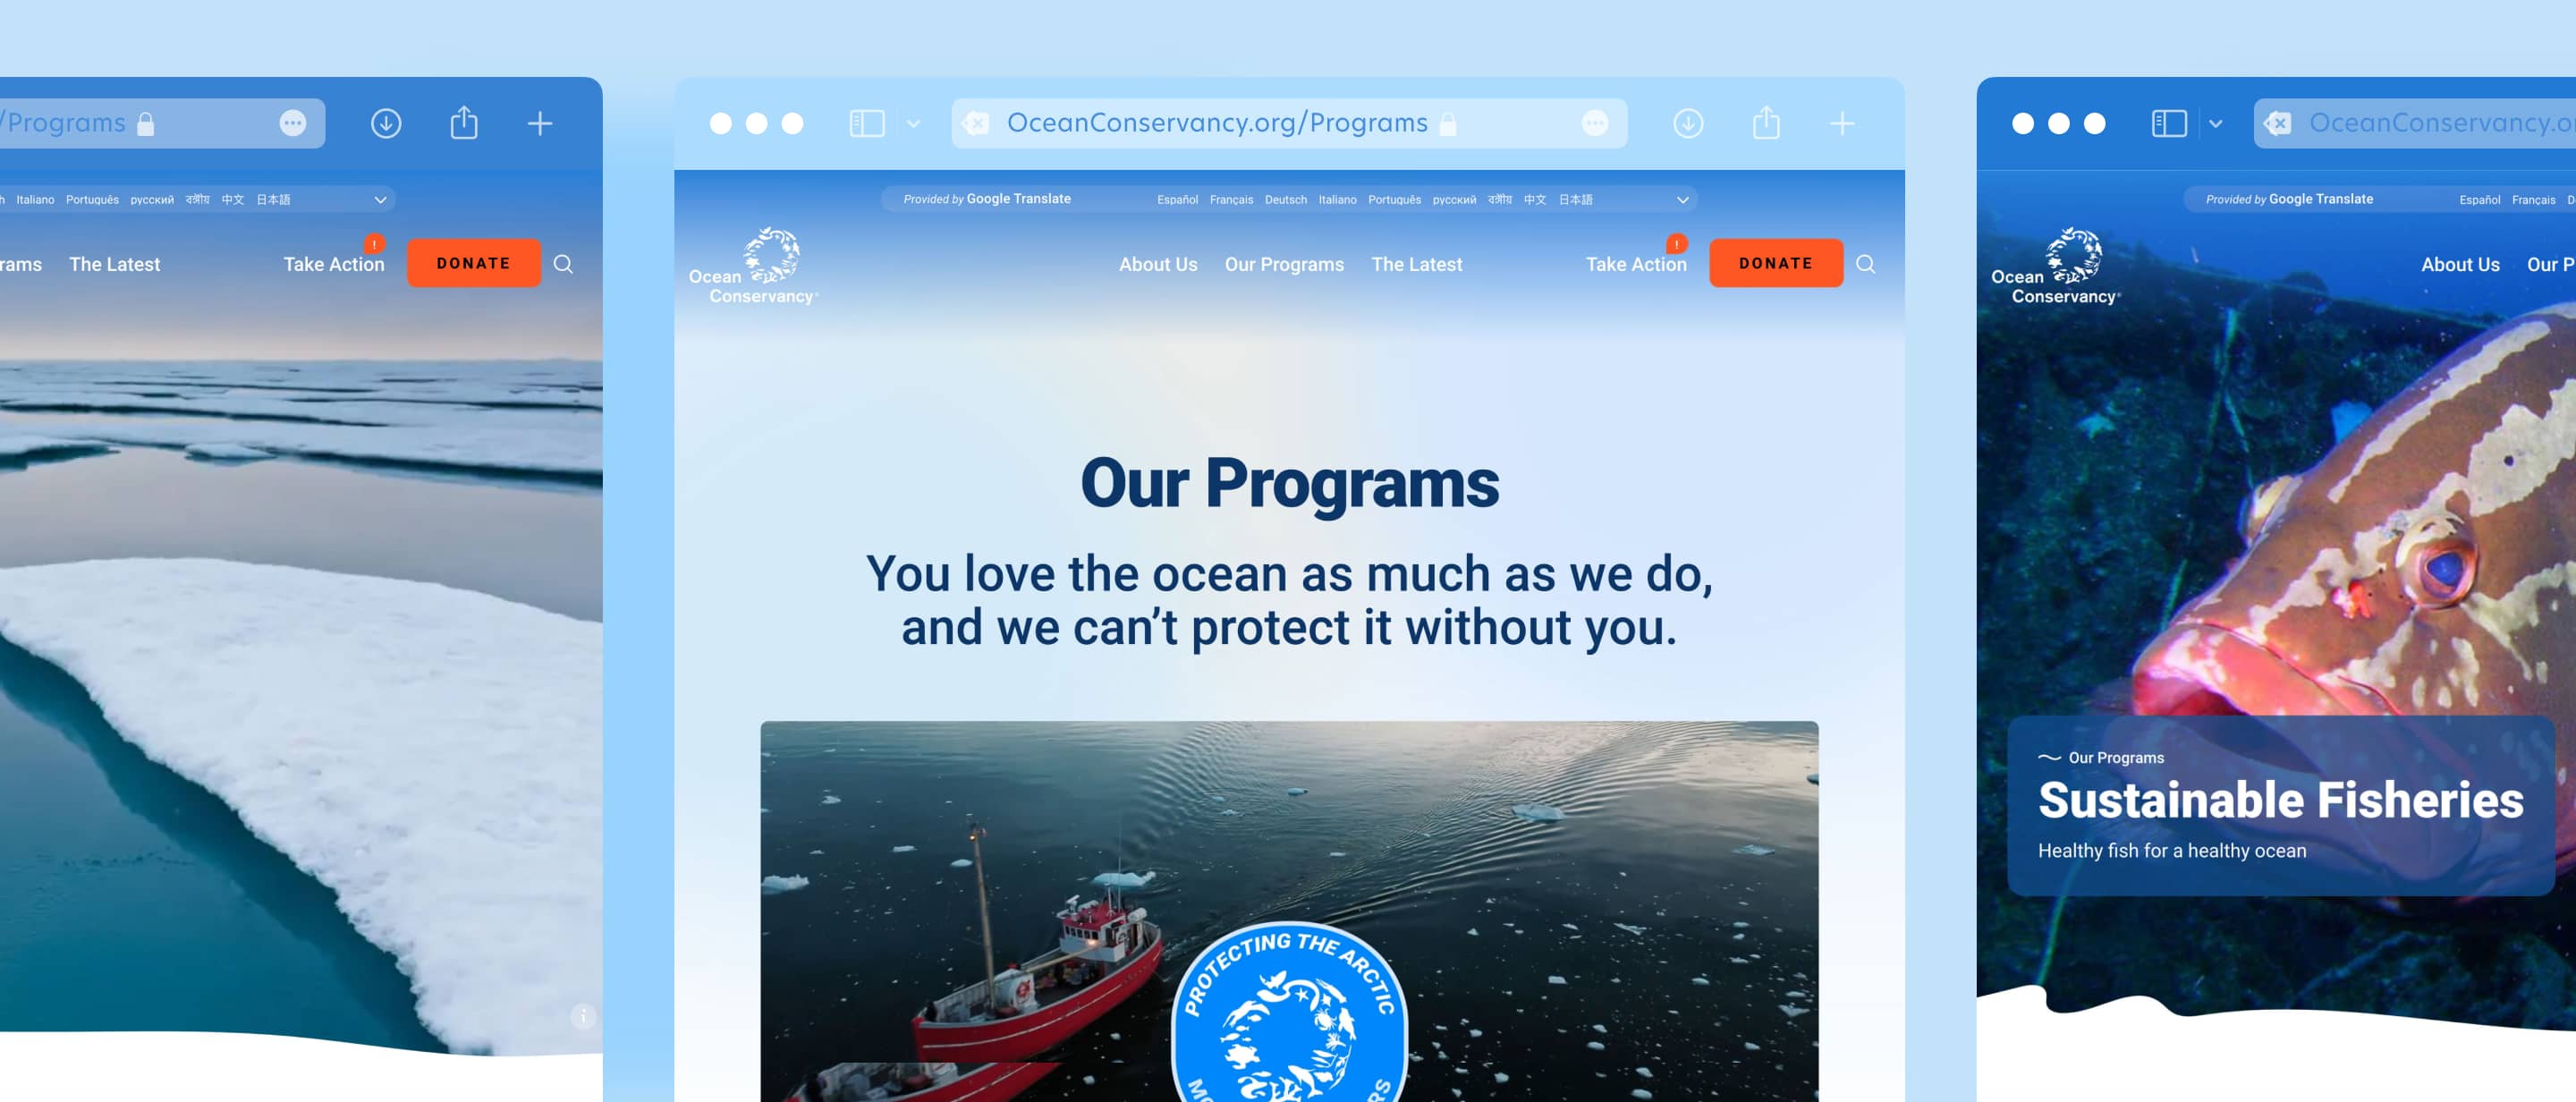 Ocean Conservancy Program Pages Redesign